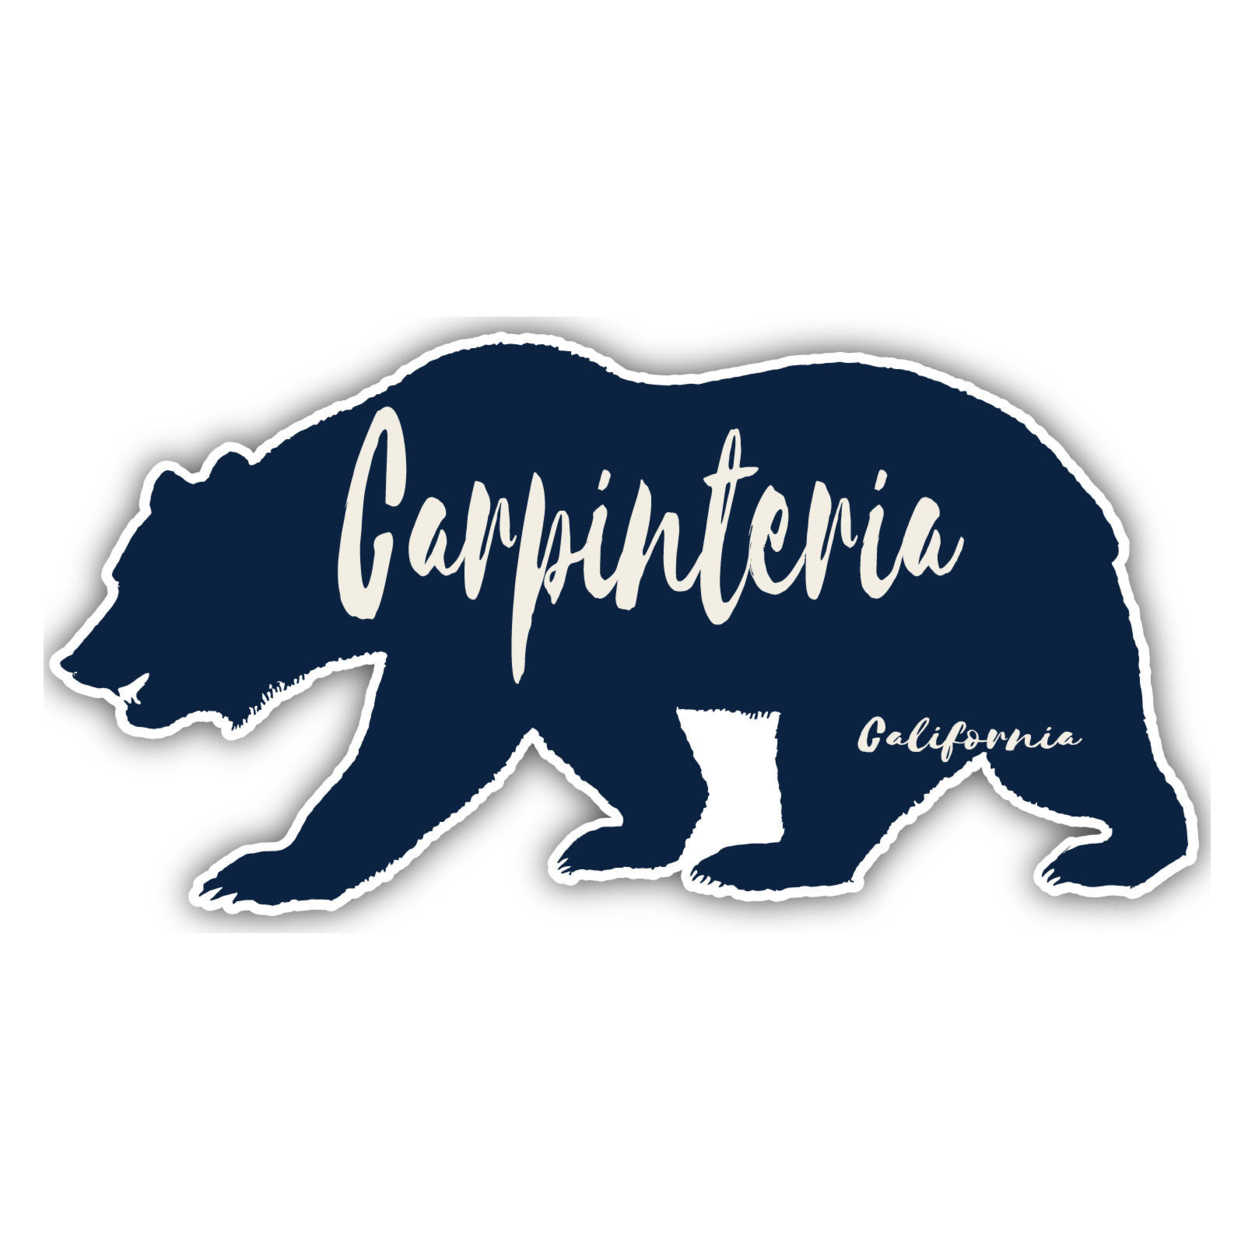 Carpinteria California Souvenir Decorative Stickers (Choose Theme And Size) - Single Unit, 10-Inch, Tent